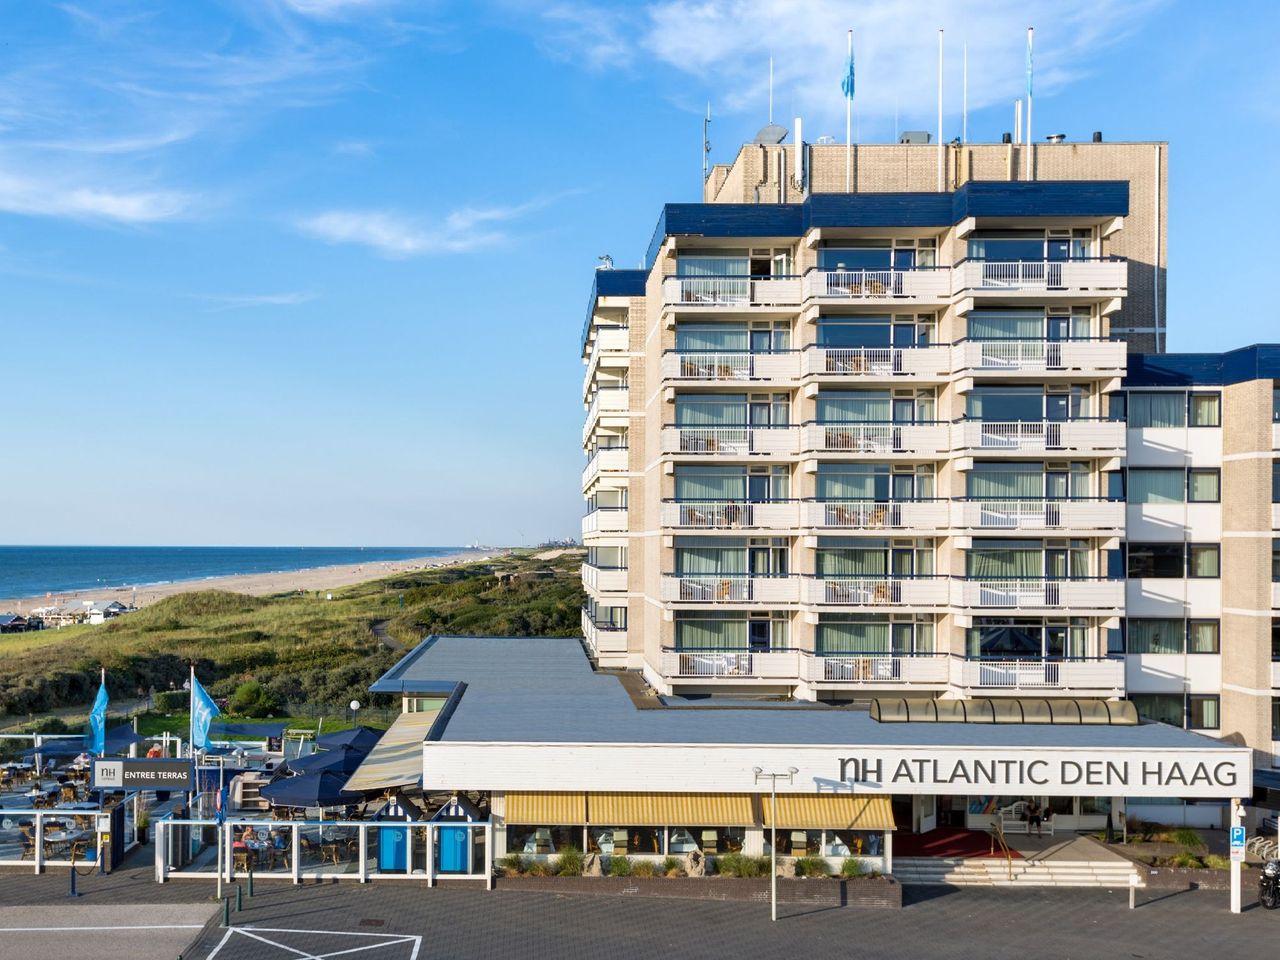 7 Tage im Hotel NH Atlantic Den Haag 